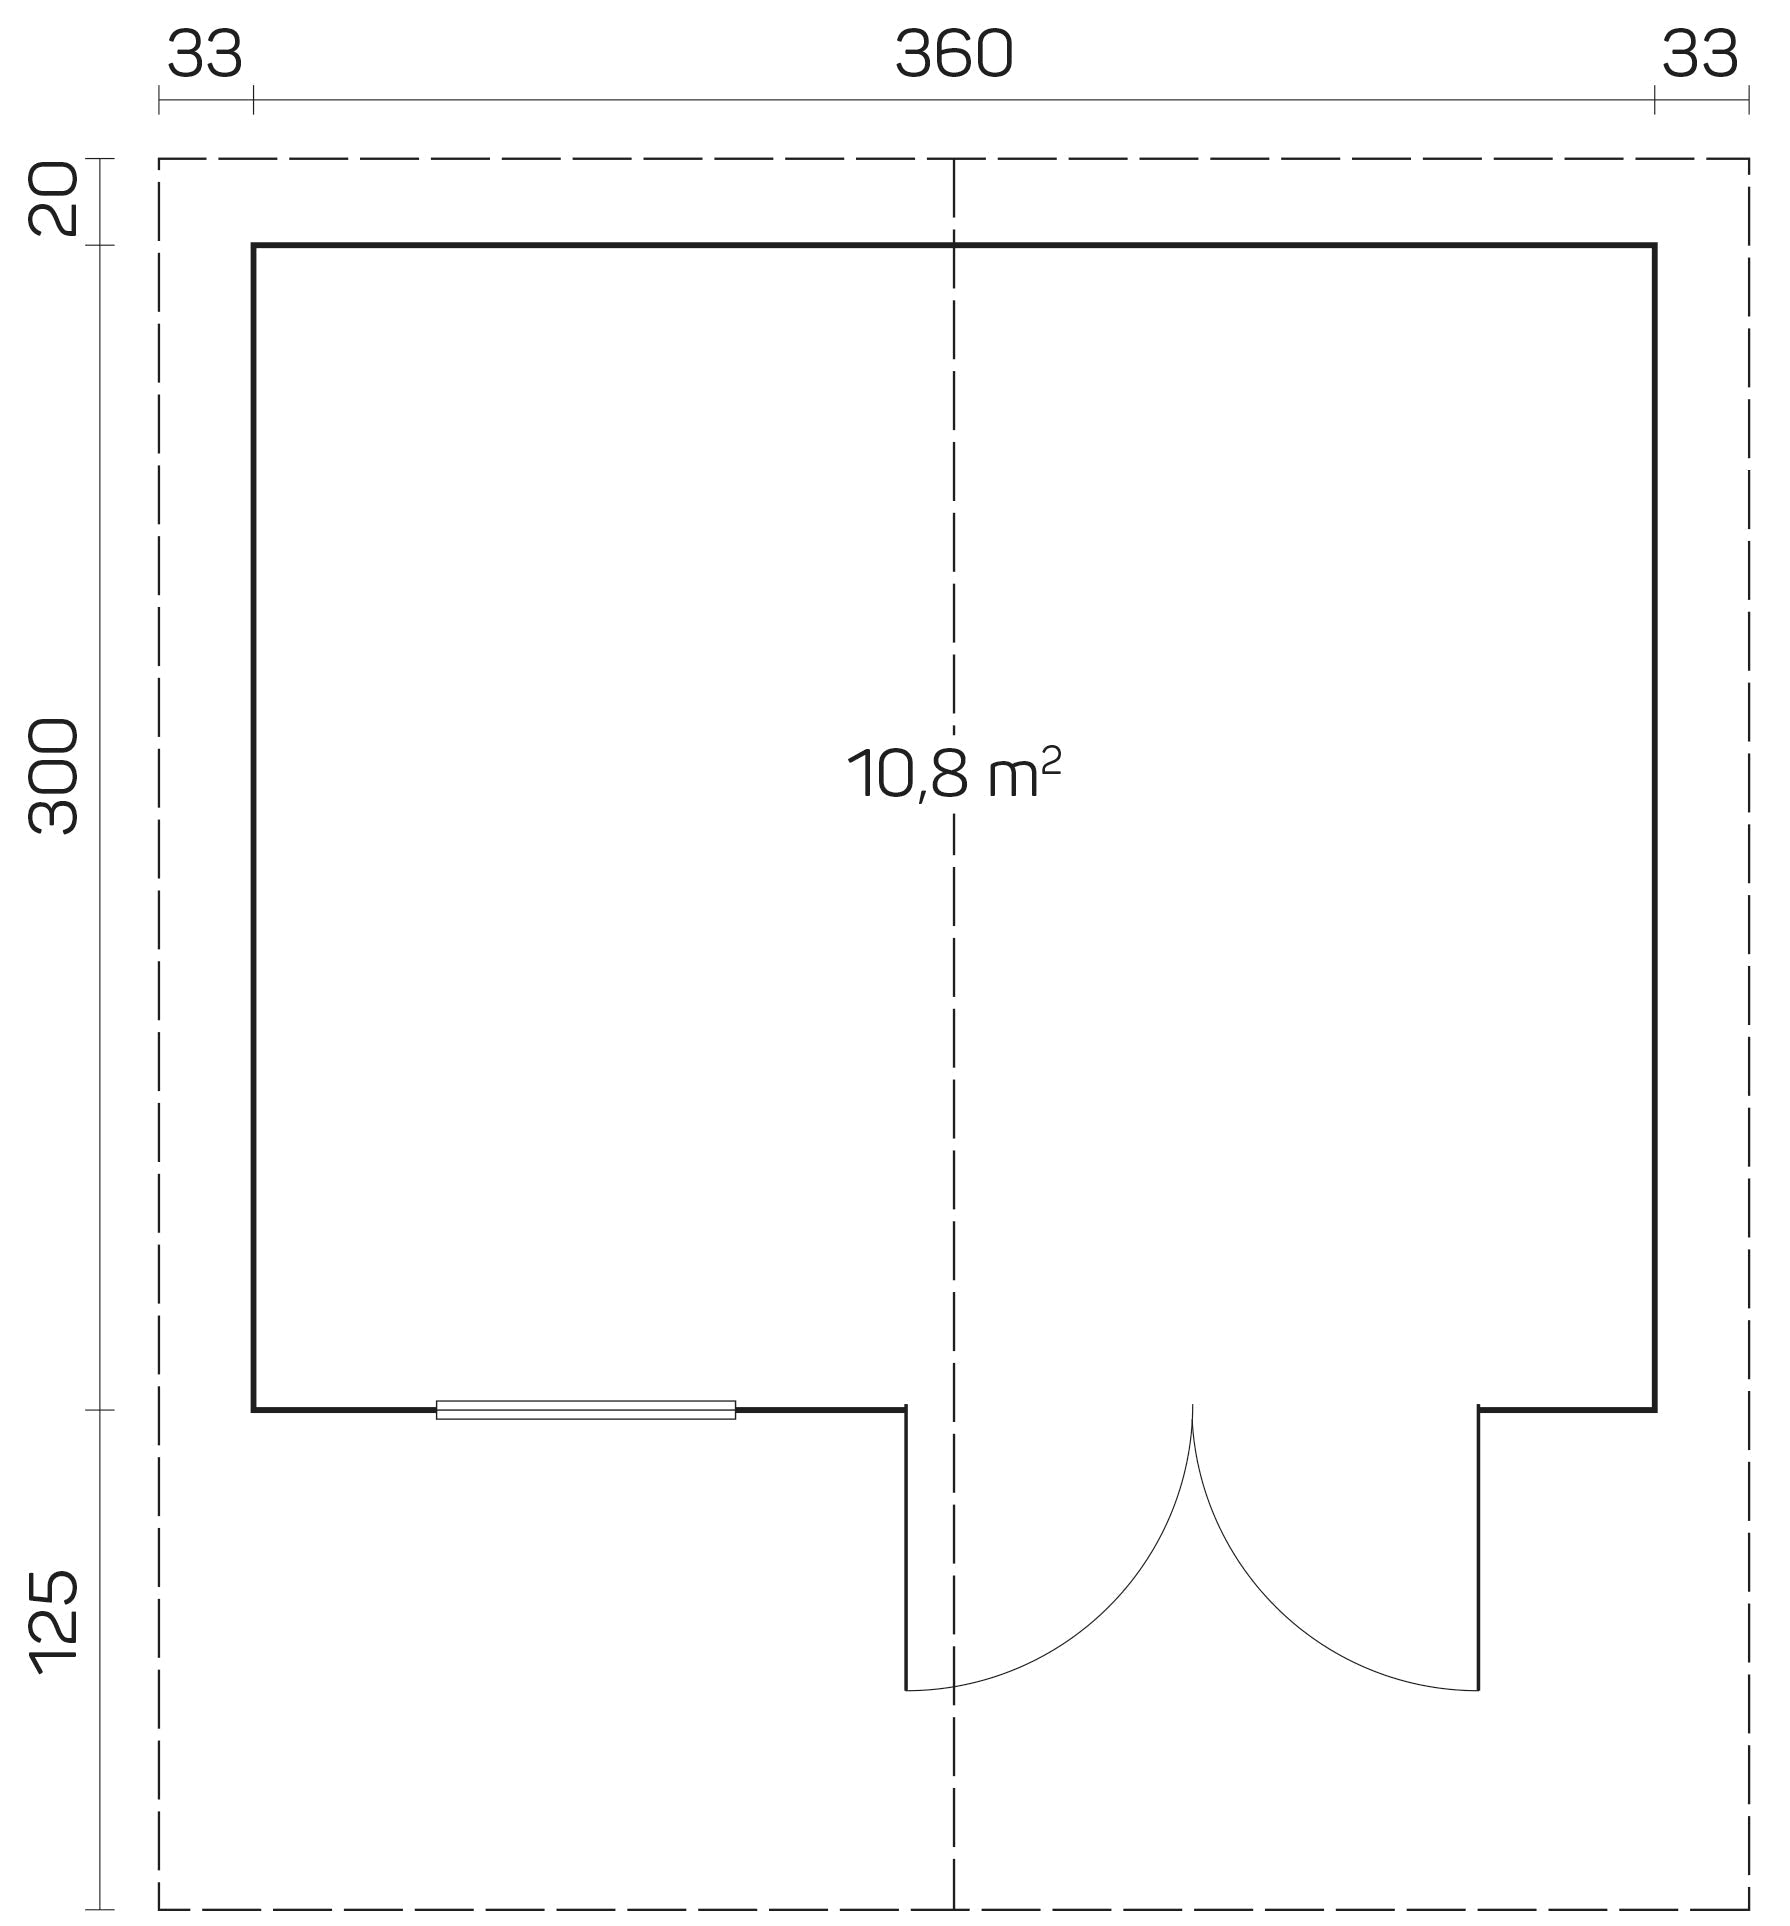 MARI-A 3.8x3.2m Log Cabin Plan